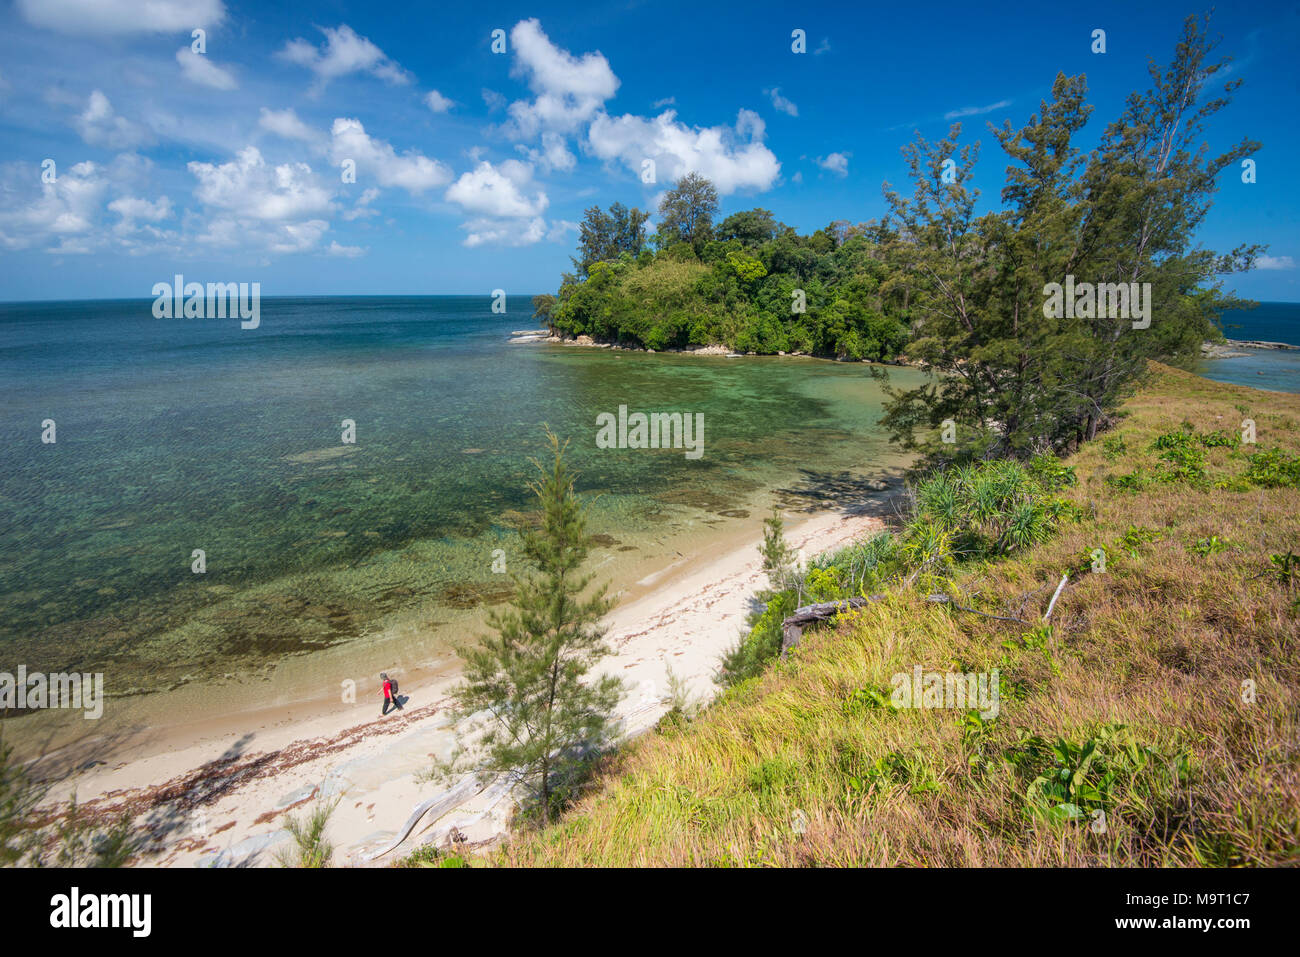 Landscape of a beach, Kudat, Sabah, Malaysia, Borneo, Stock Photo